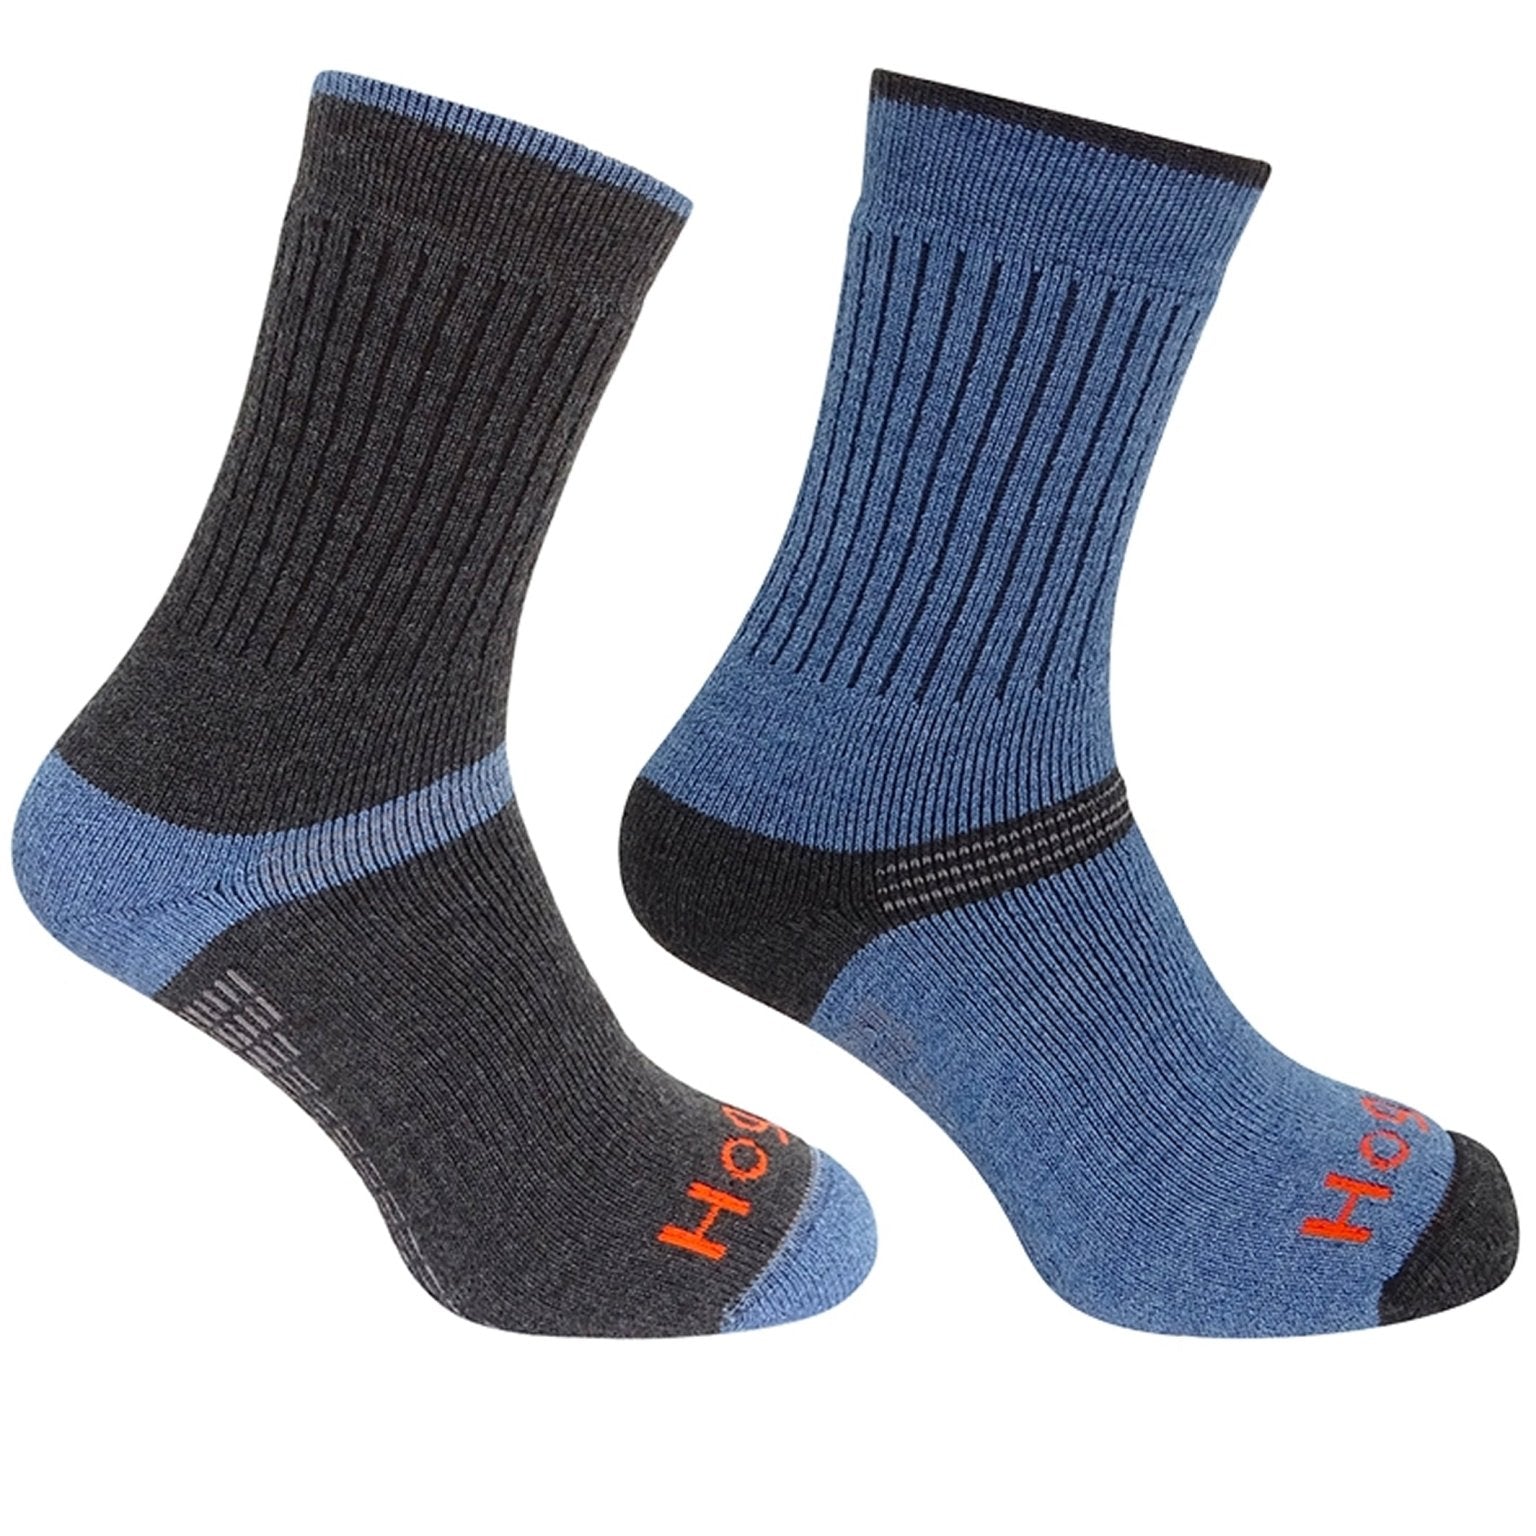 Hoggs of Fife Hoggs of Fife - 1905 Mens Socks in Charcoal/Denim (Twin Pack) - Tech Active Socks